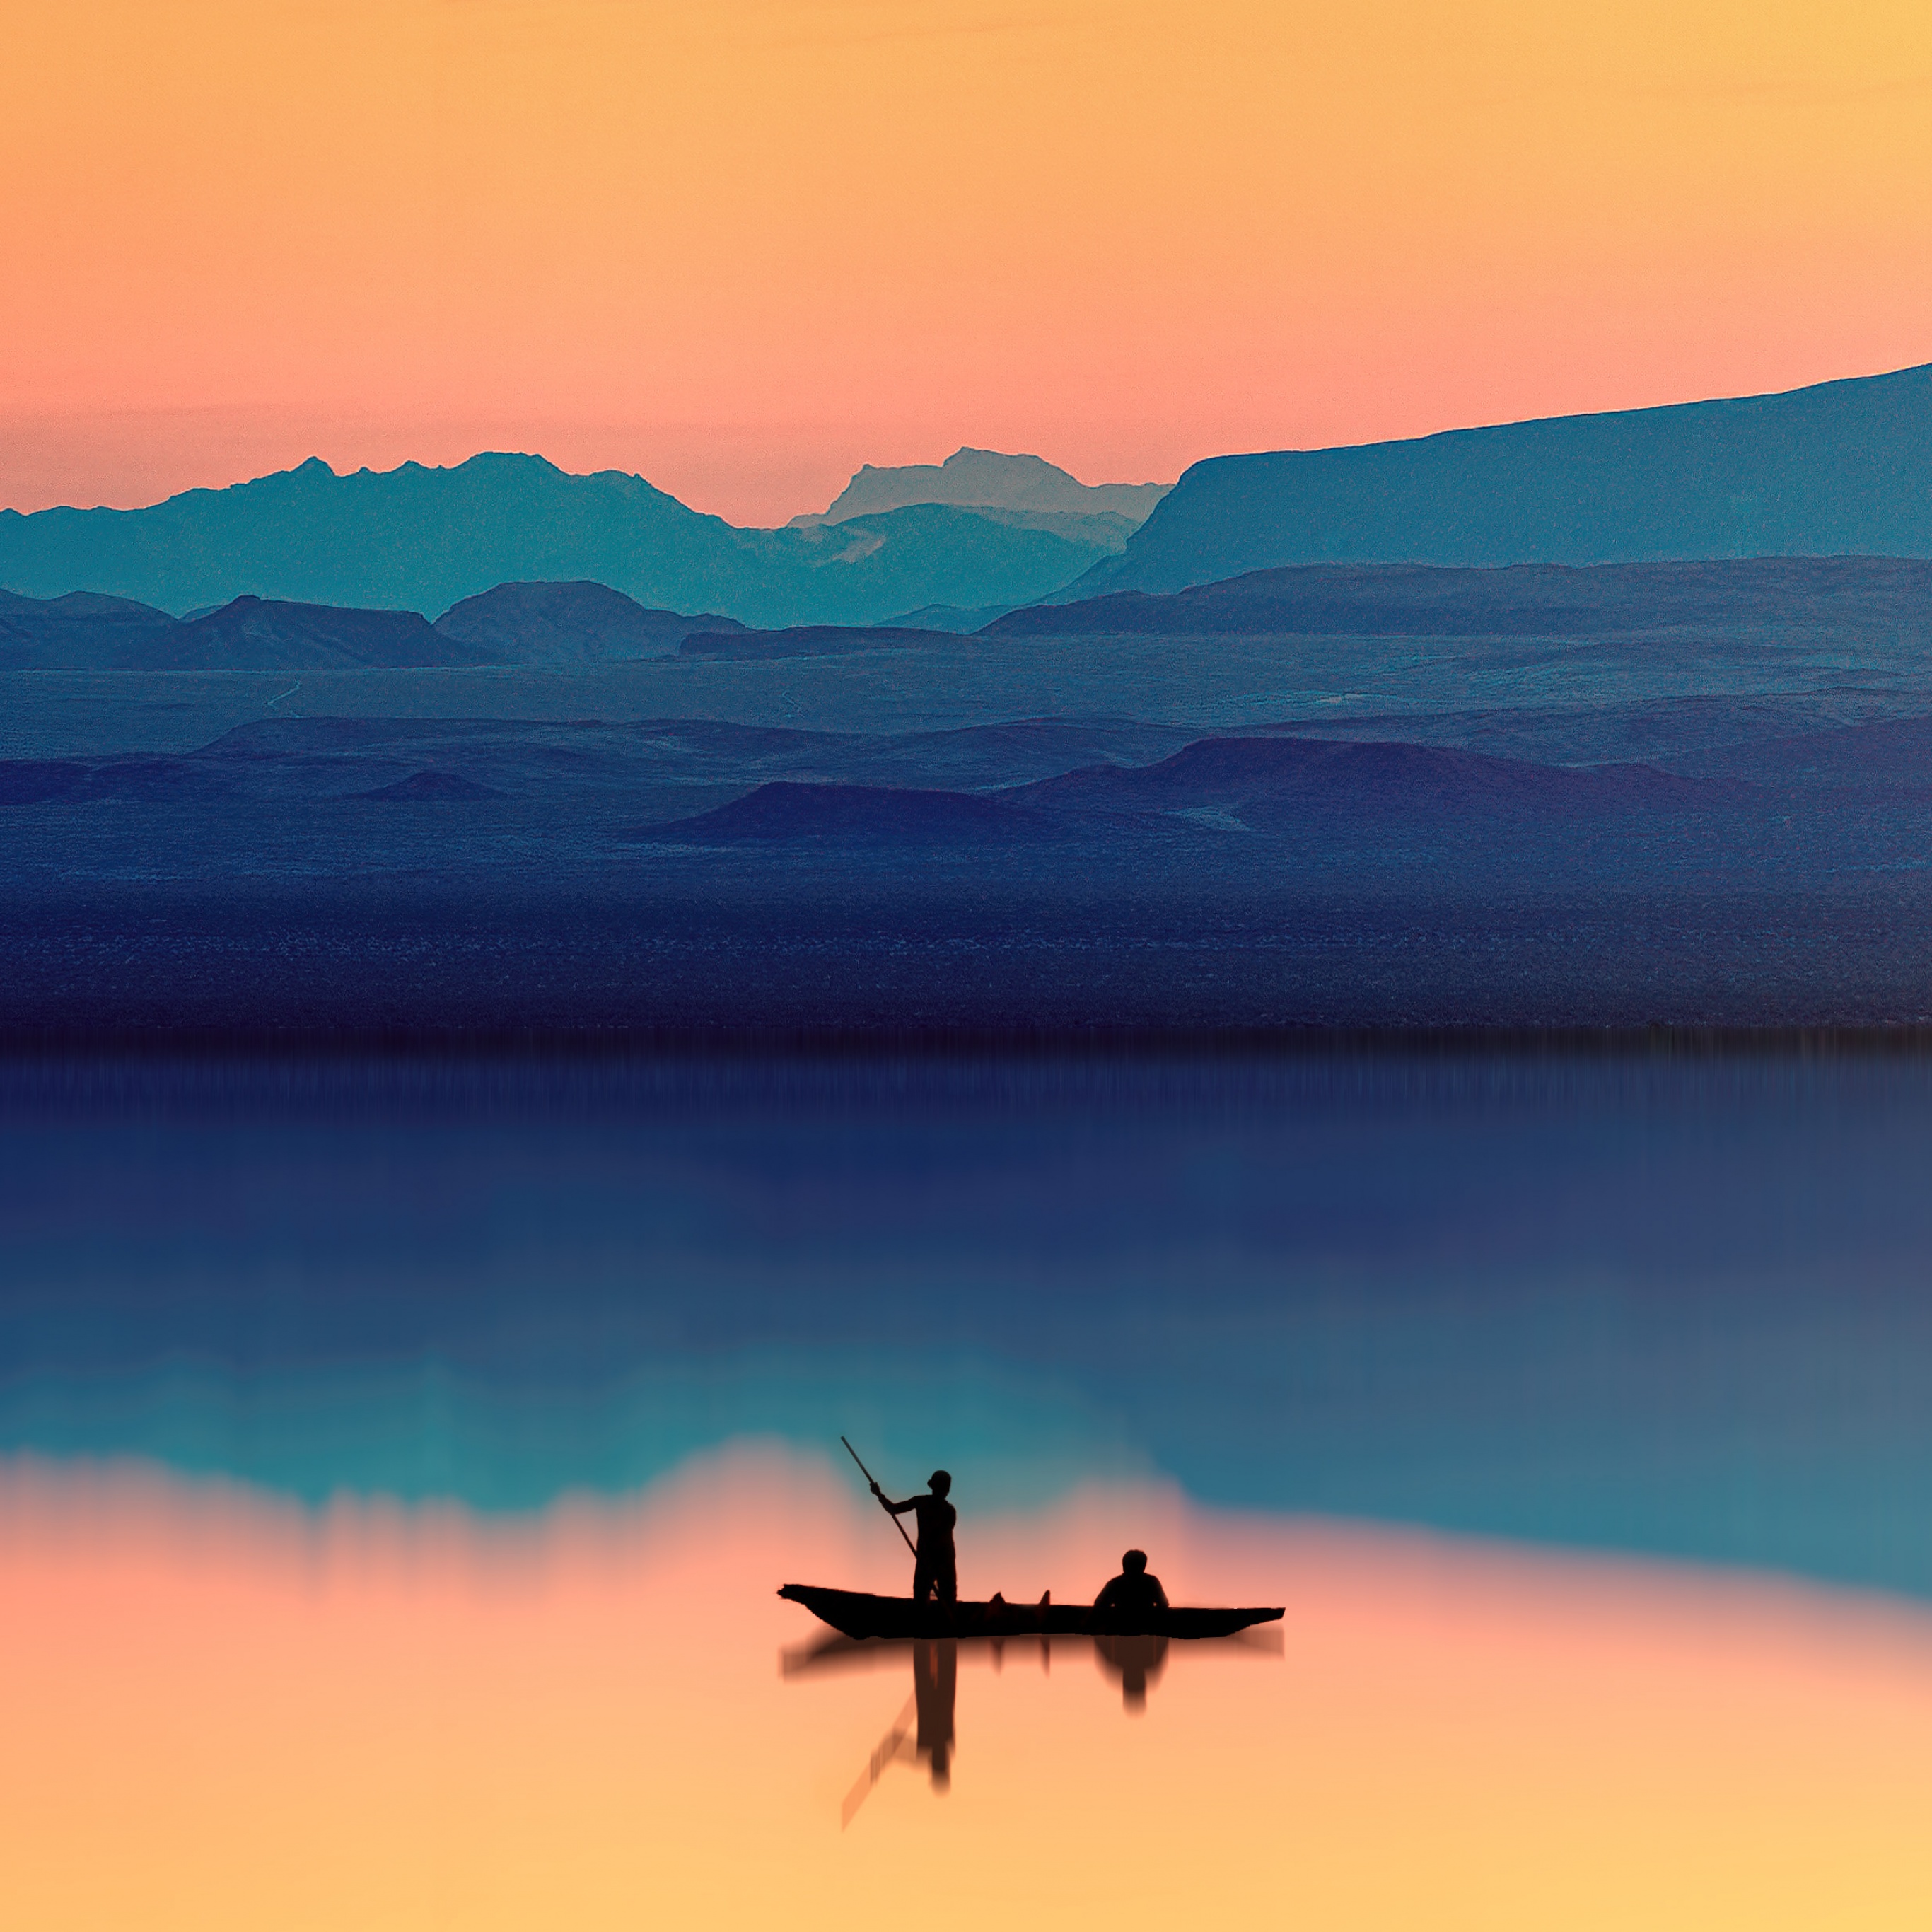 aesthetic-mountains-lake-river-dusk-evening-reflection-2732x2732-530.jpg